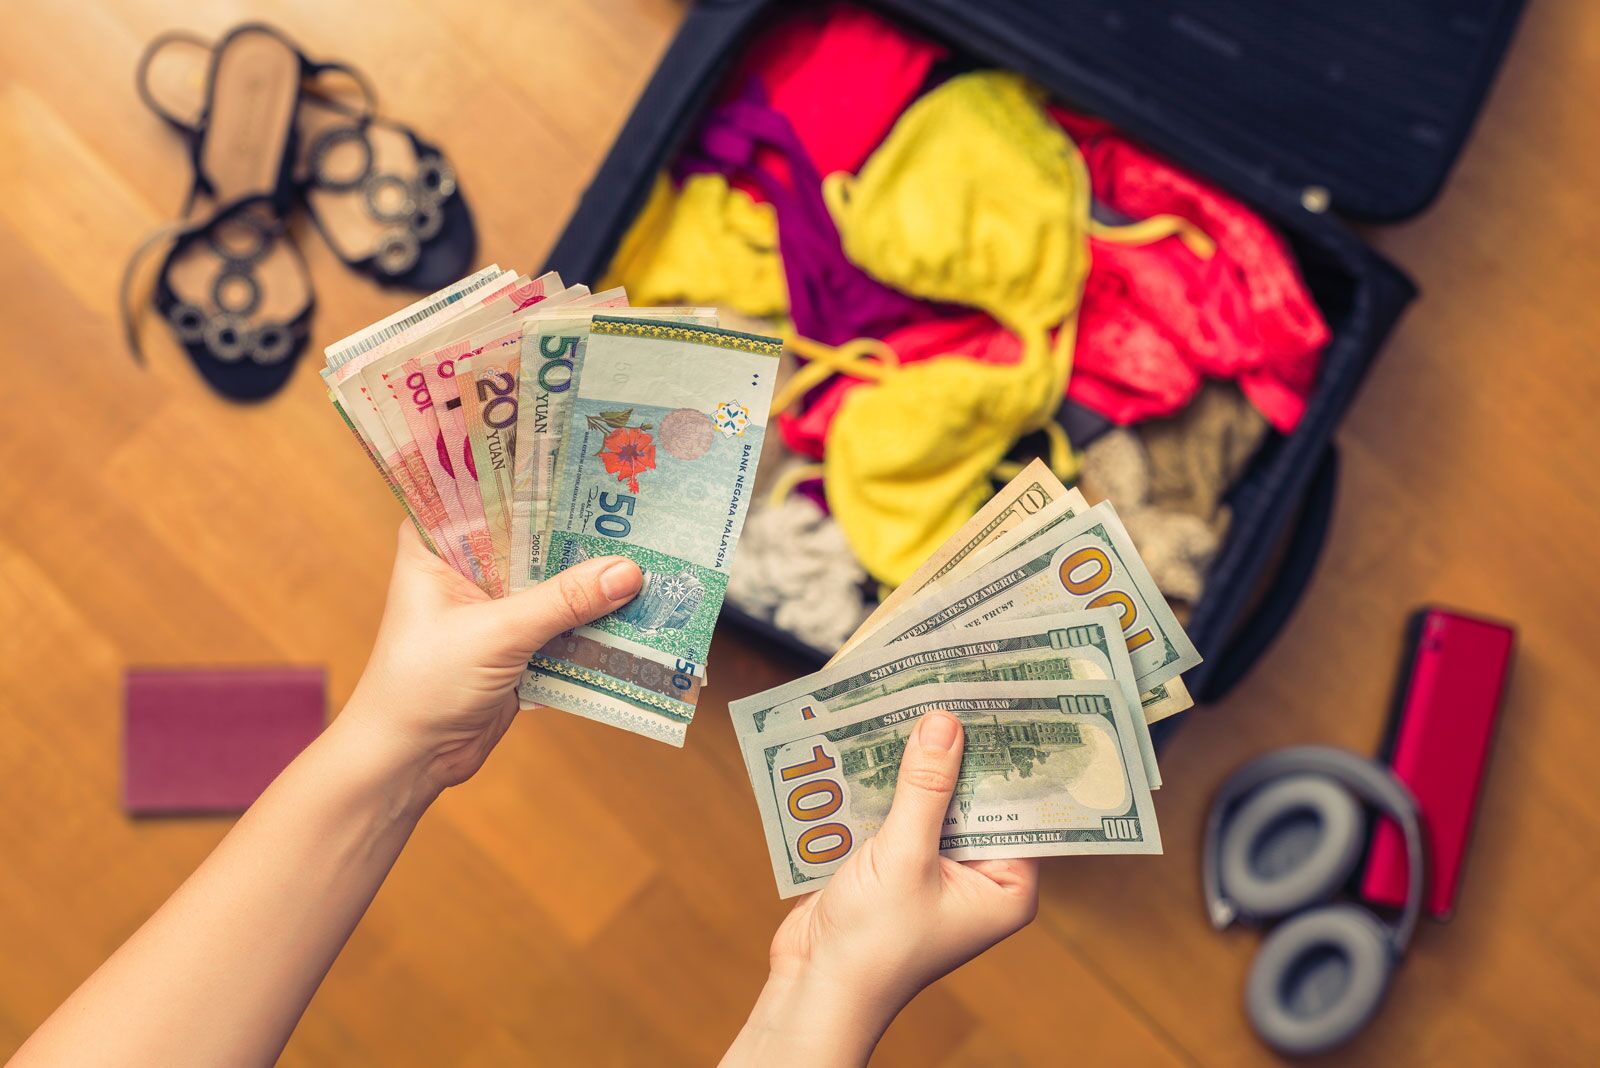 70 Genius (and Unexpected!) Travel Hacks - Money-Saving Travel Tips